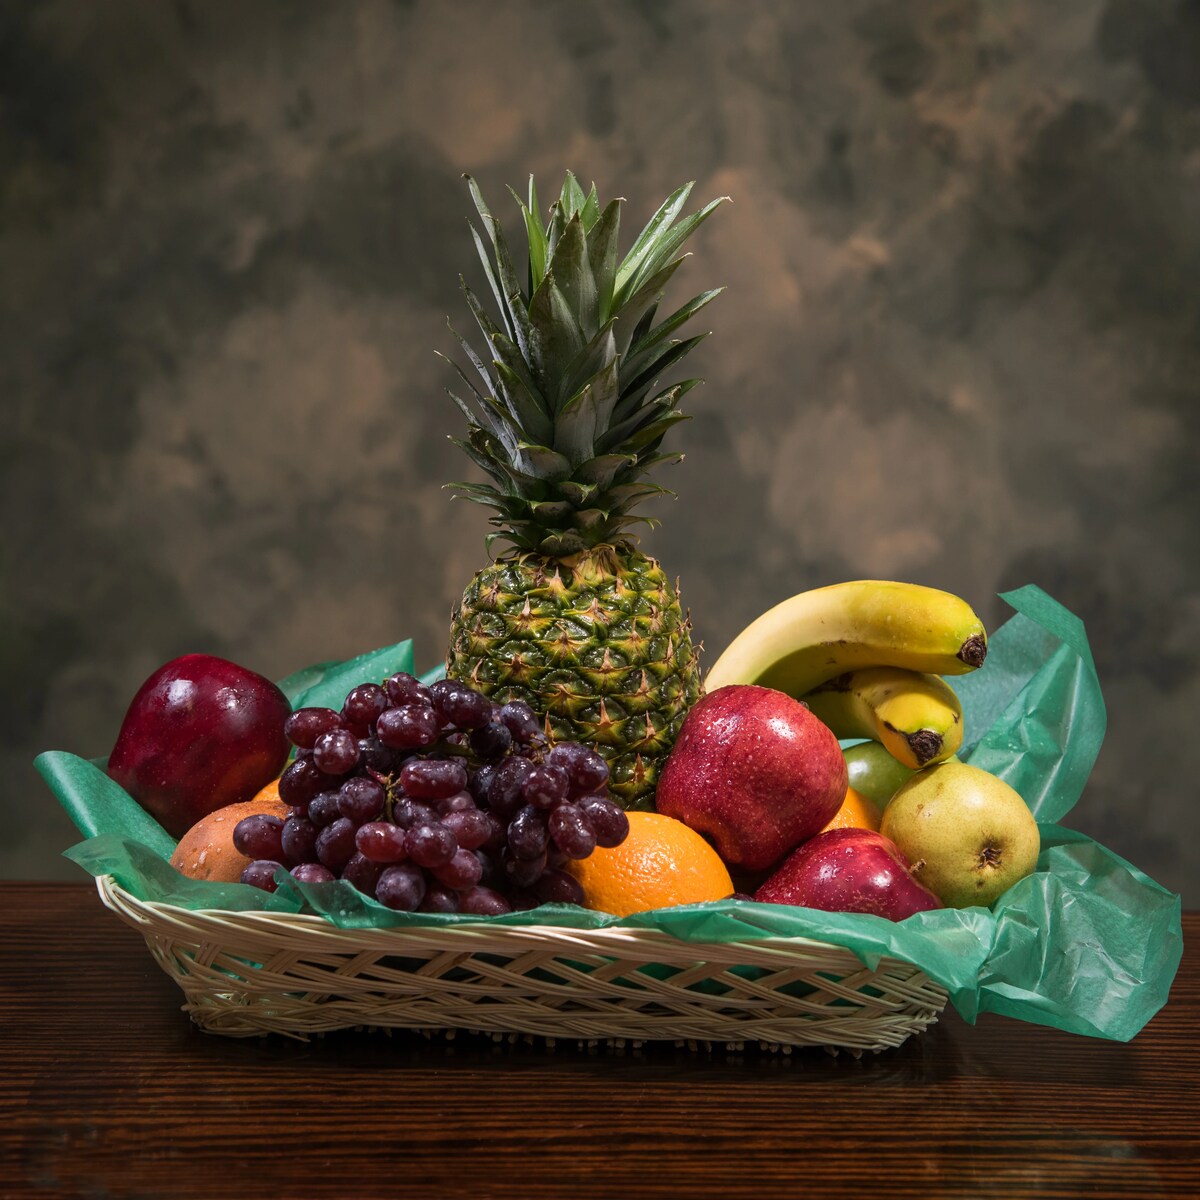 How To Make Fresh Fruit Baskets